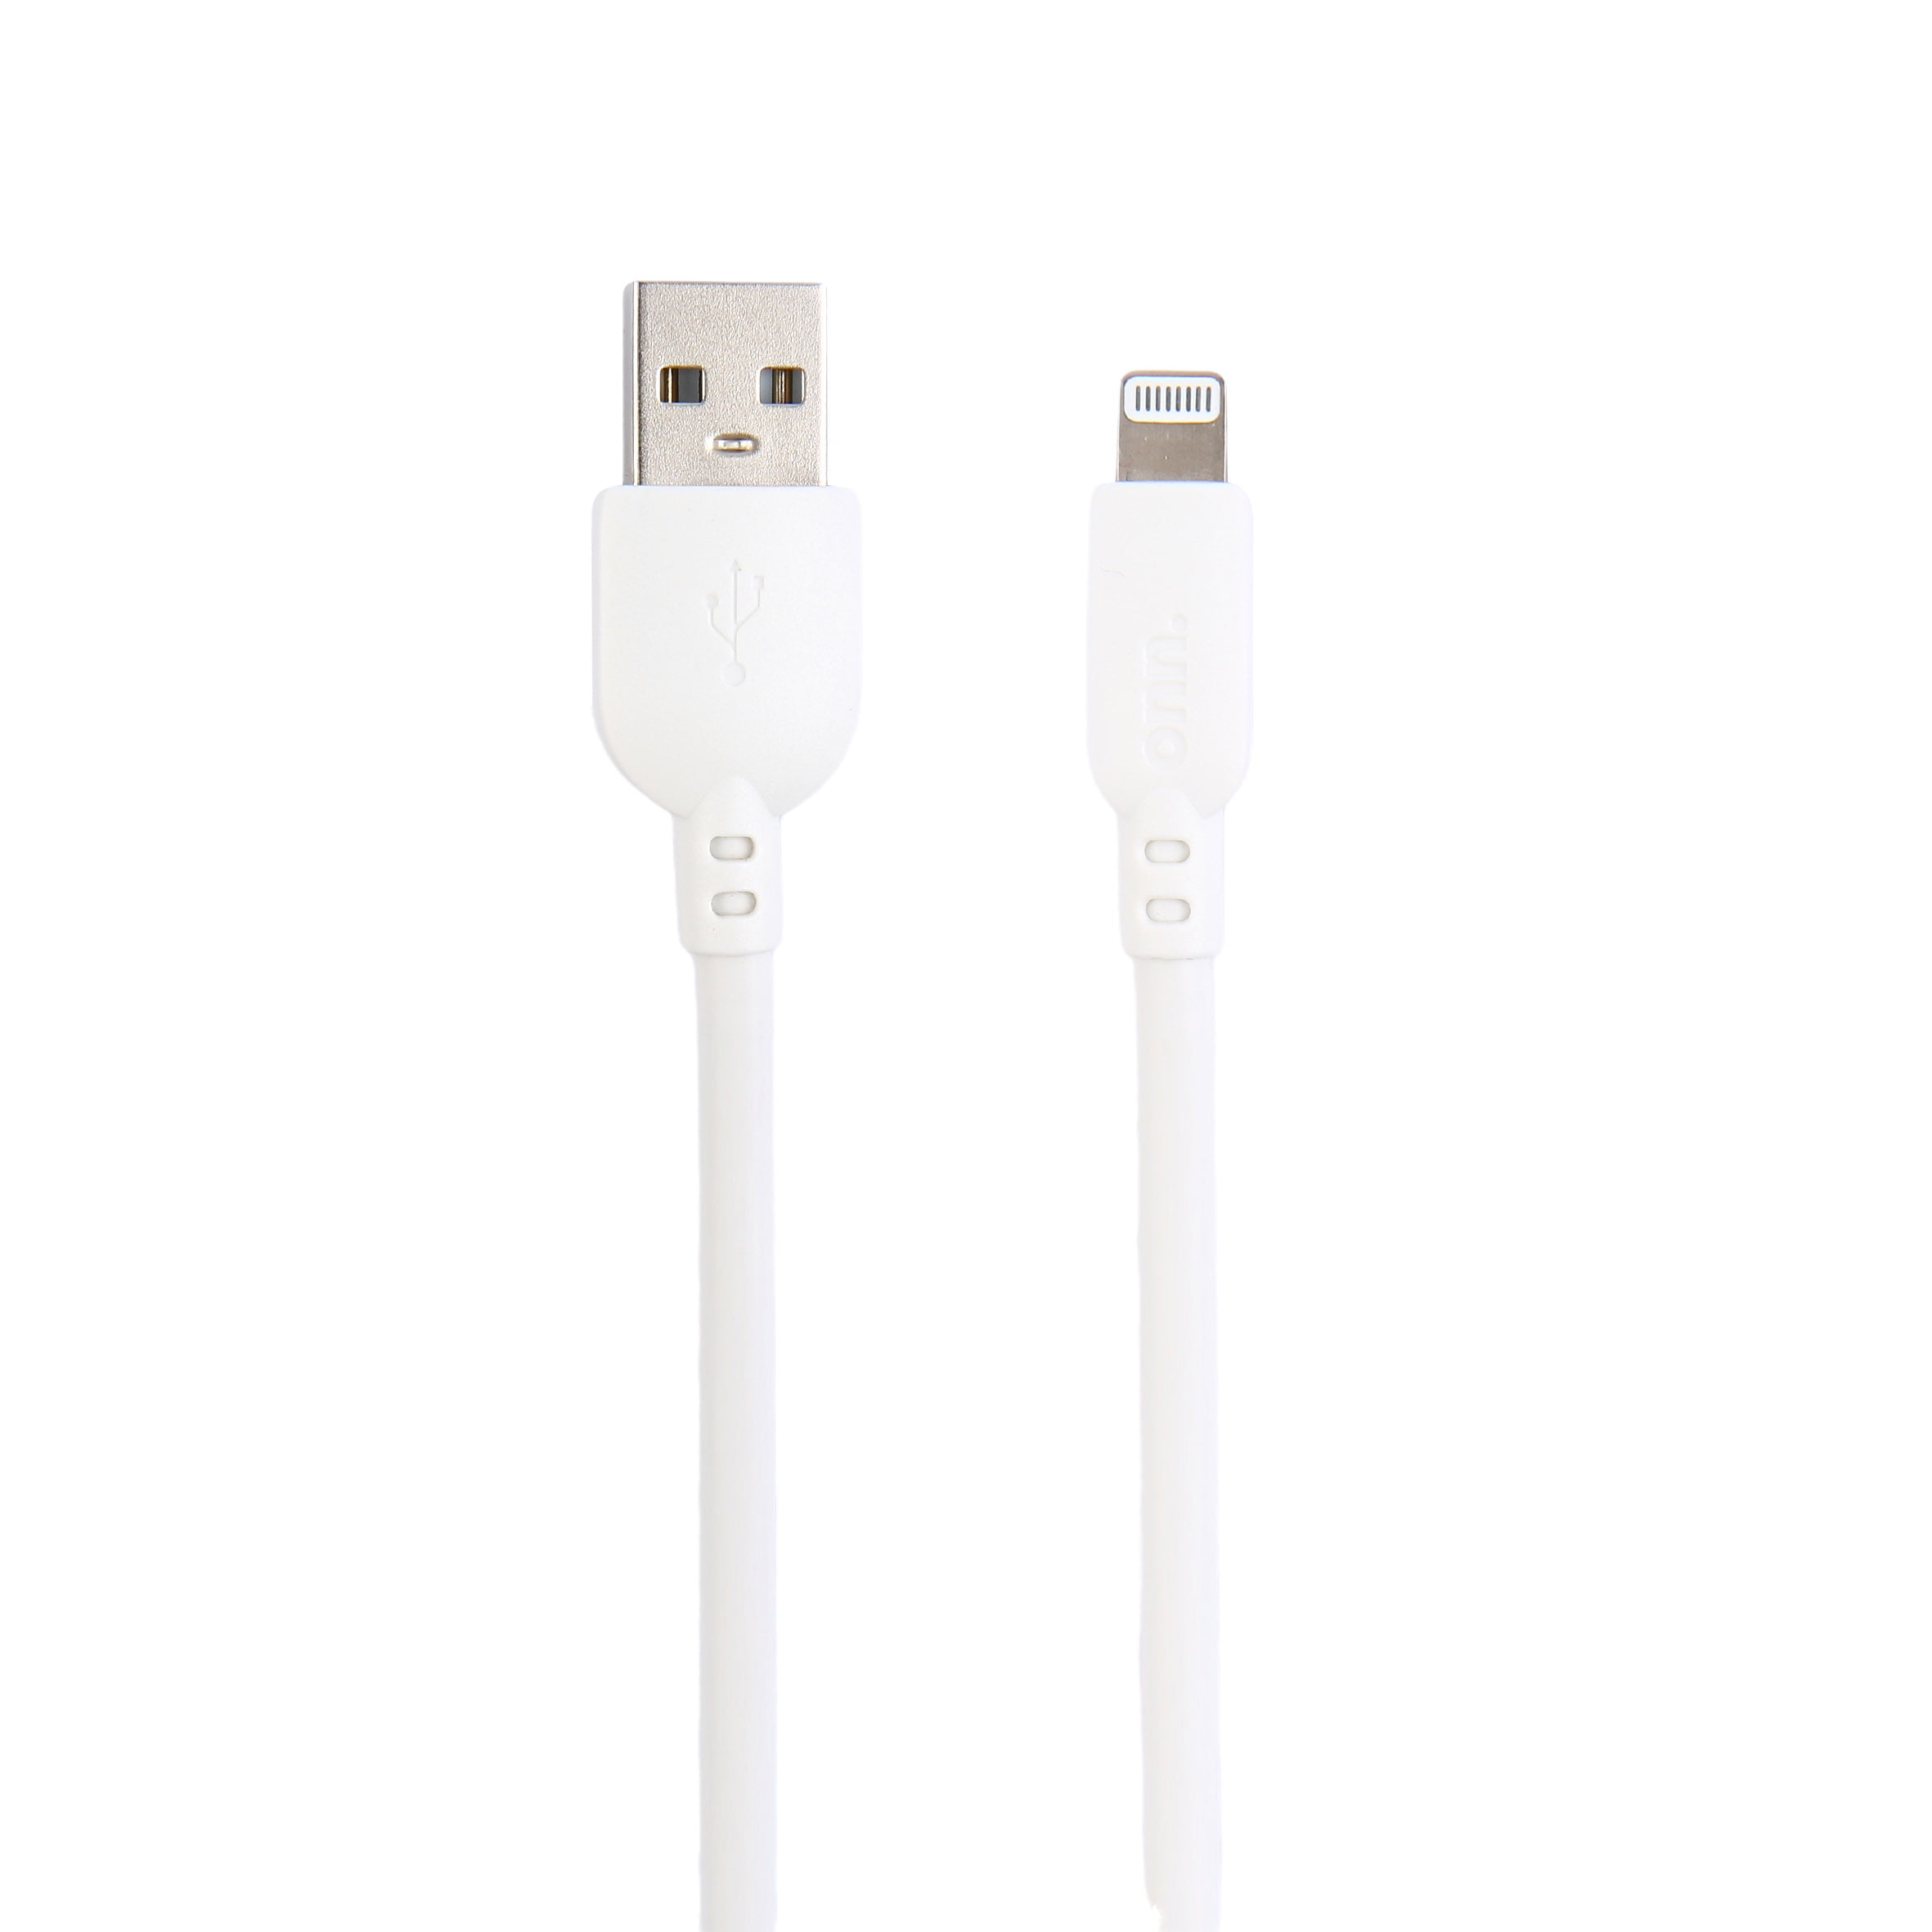 10ft Lightning USB White, for iPhone/iPad/iPod, 5 Volt Walmart.com